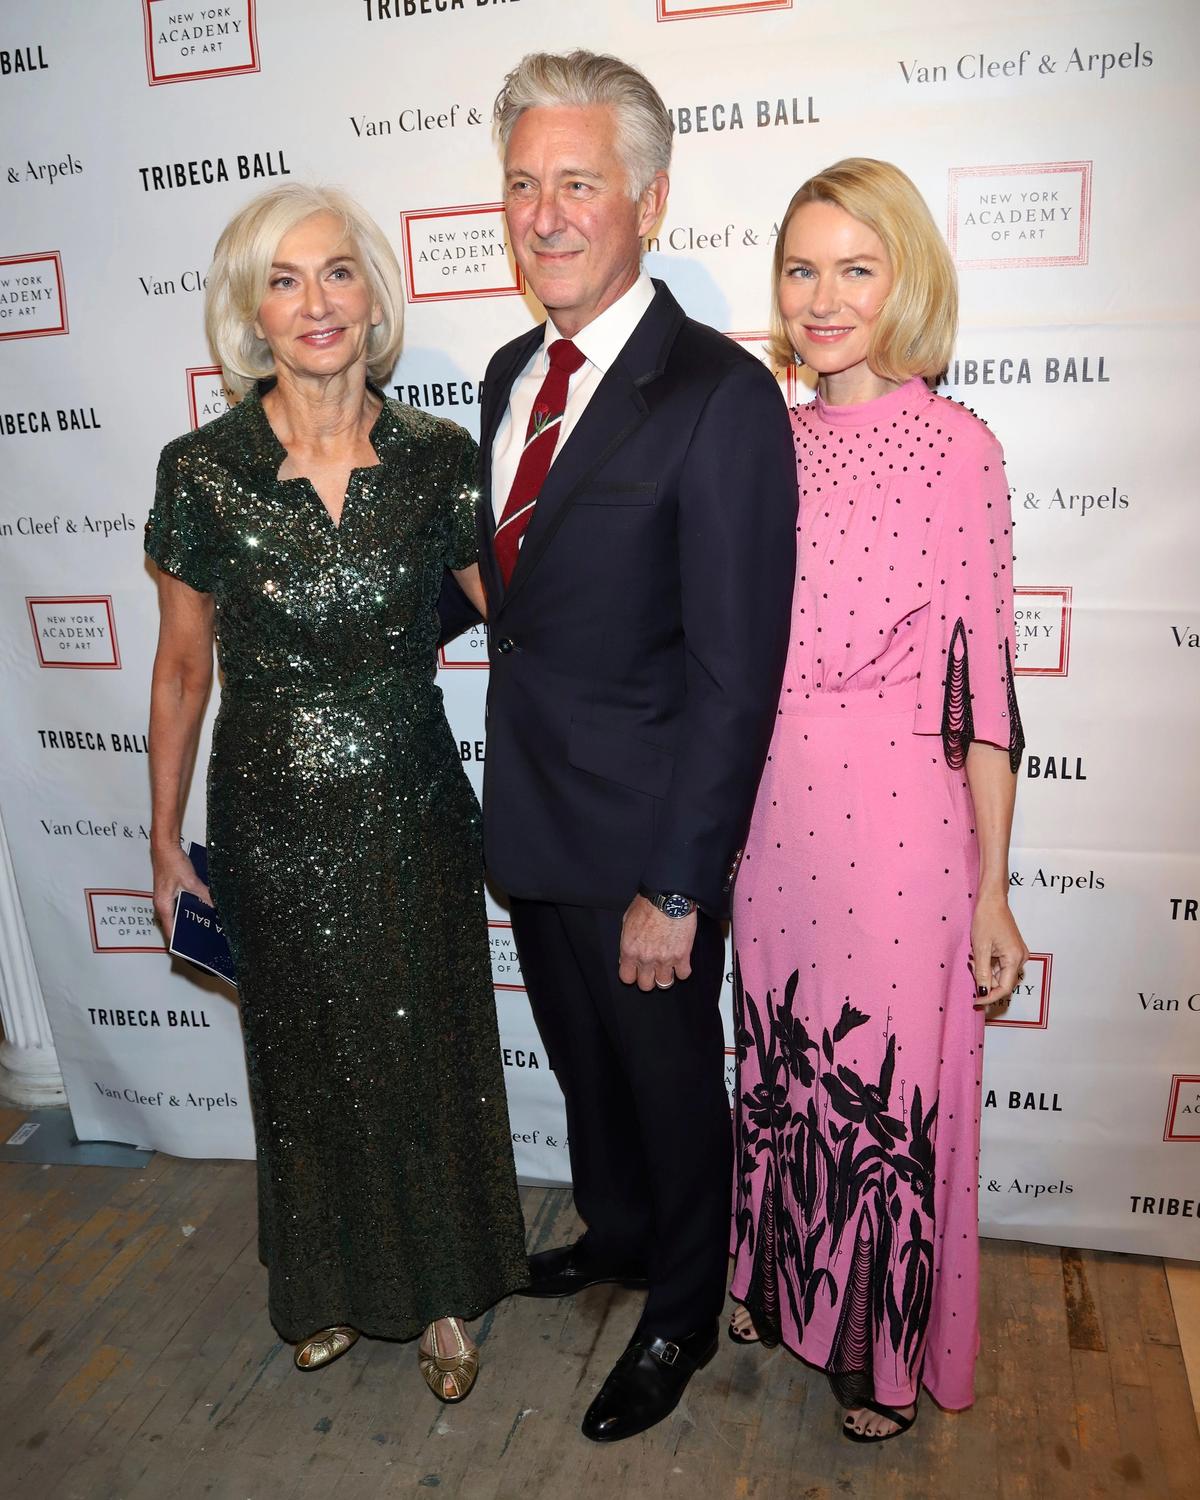 From left: Eileen Guggenheim, David Kratz and Naomi Watts attend the Tribeca Ball at the New York Academy of Art in 2018. Greg Allen/Invision/AP/Shutterstock